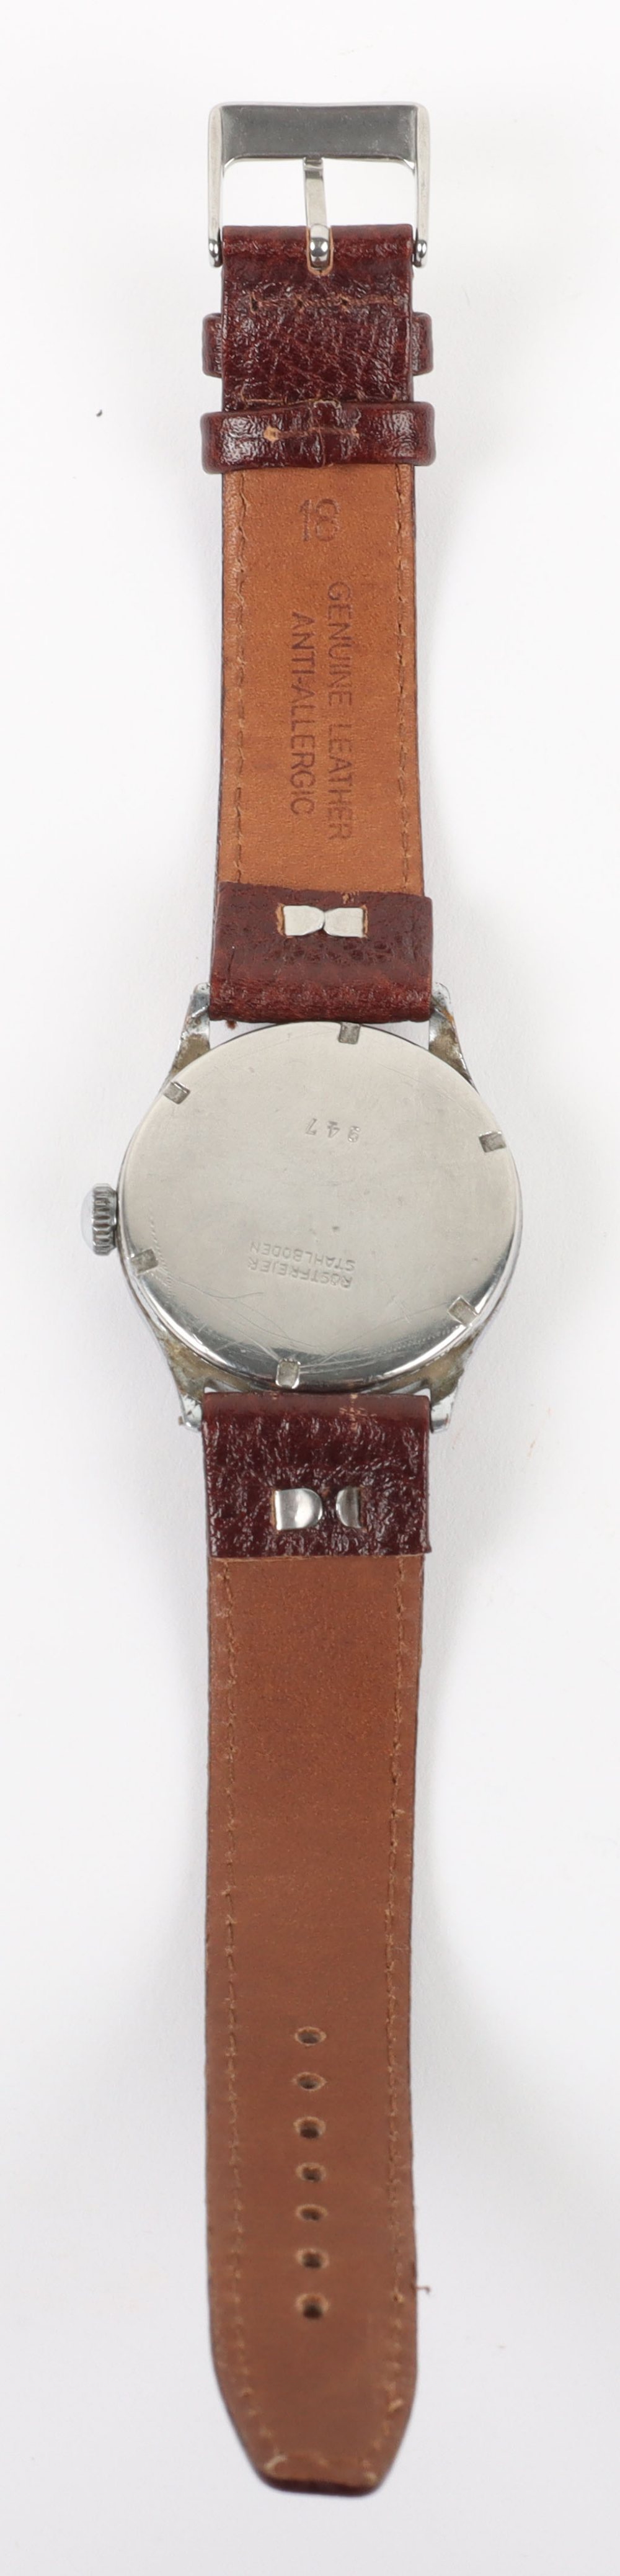 Acacia S.A wristwatch - Image 3 of 5